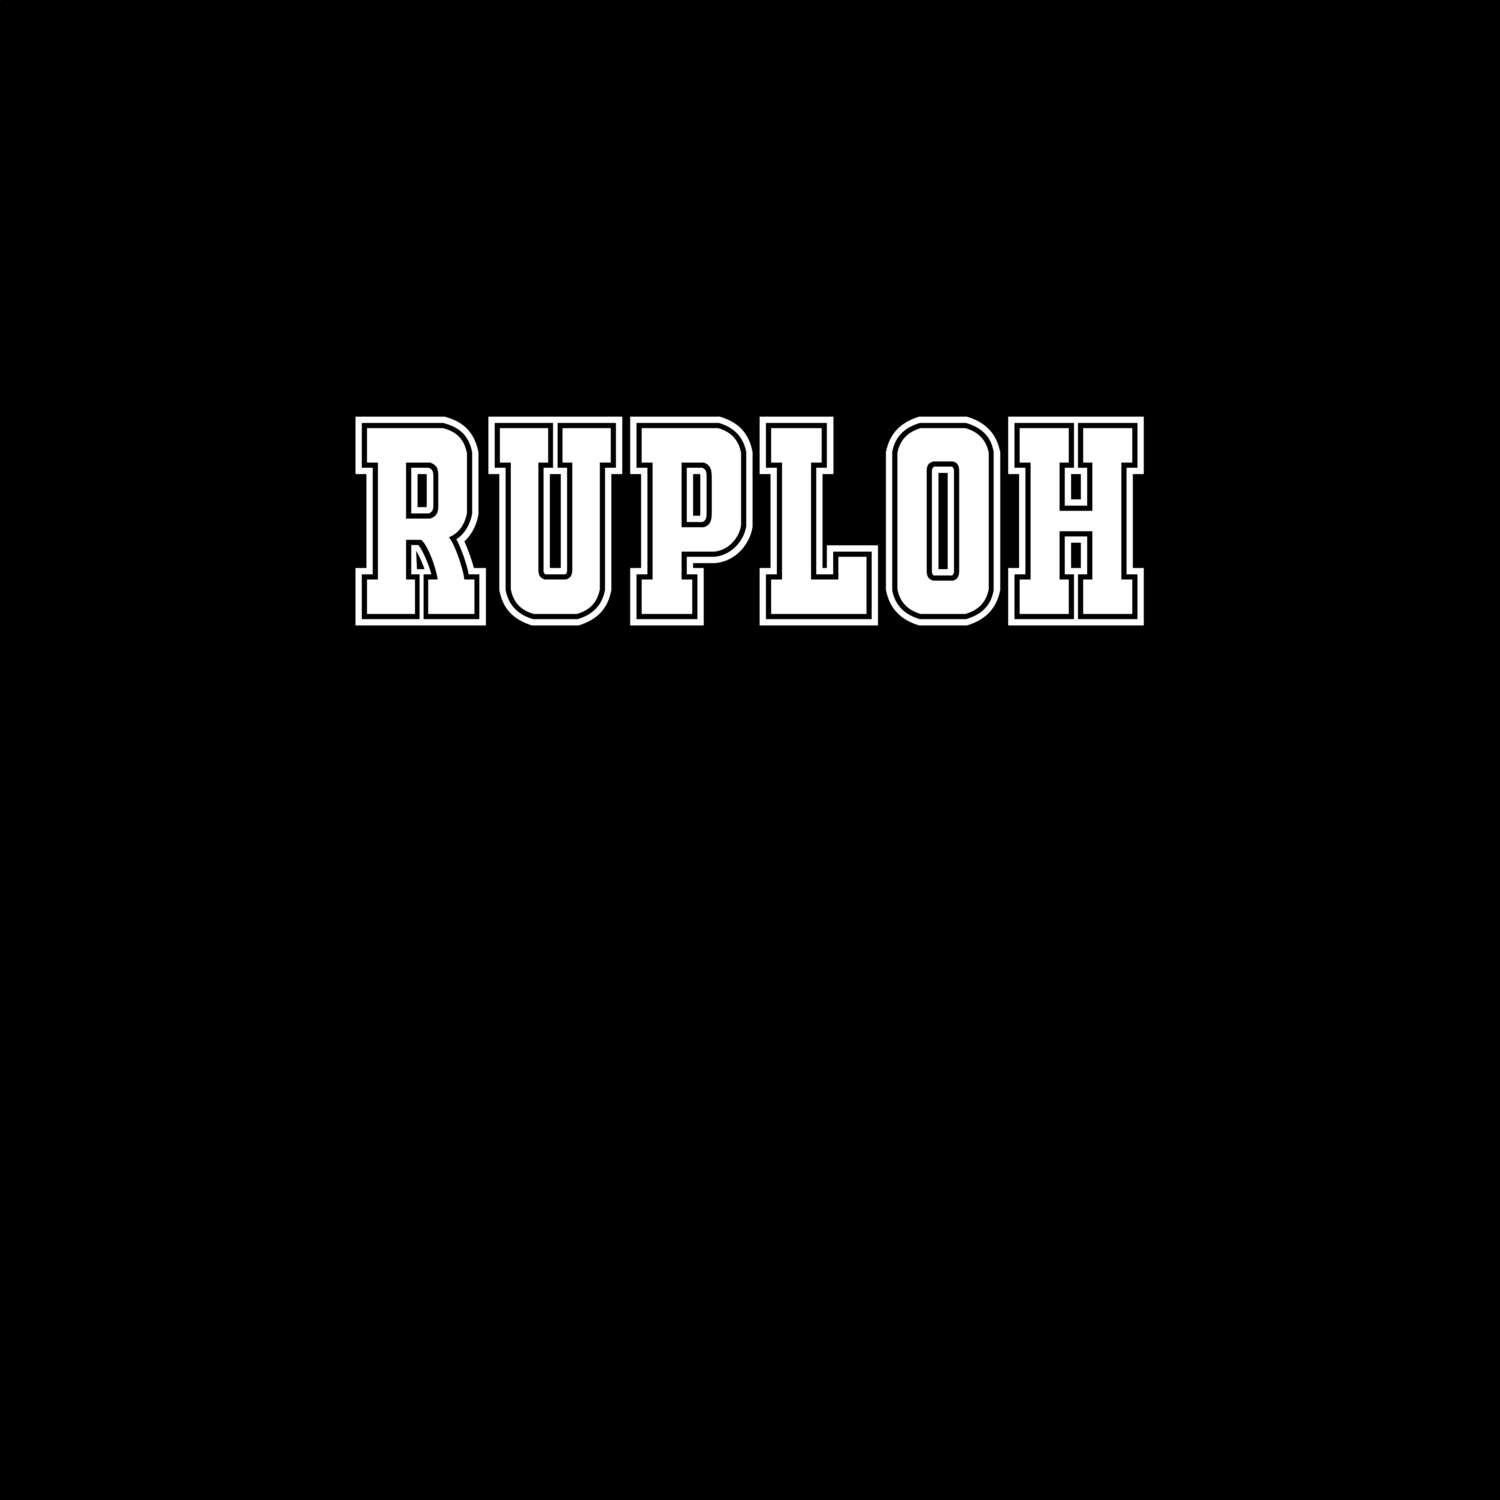 Ruploh T-Shirt »Classic«